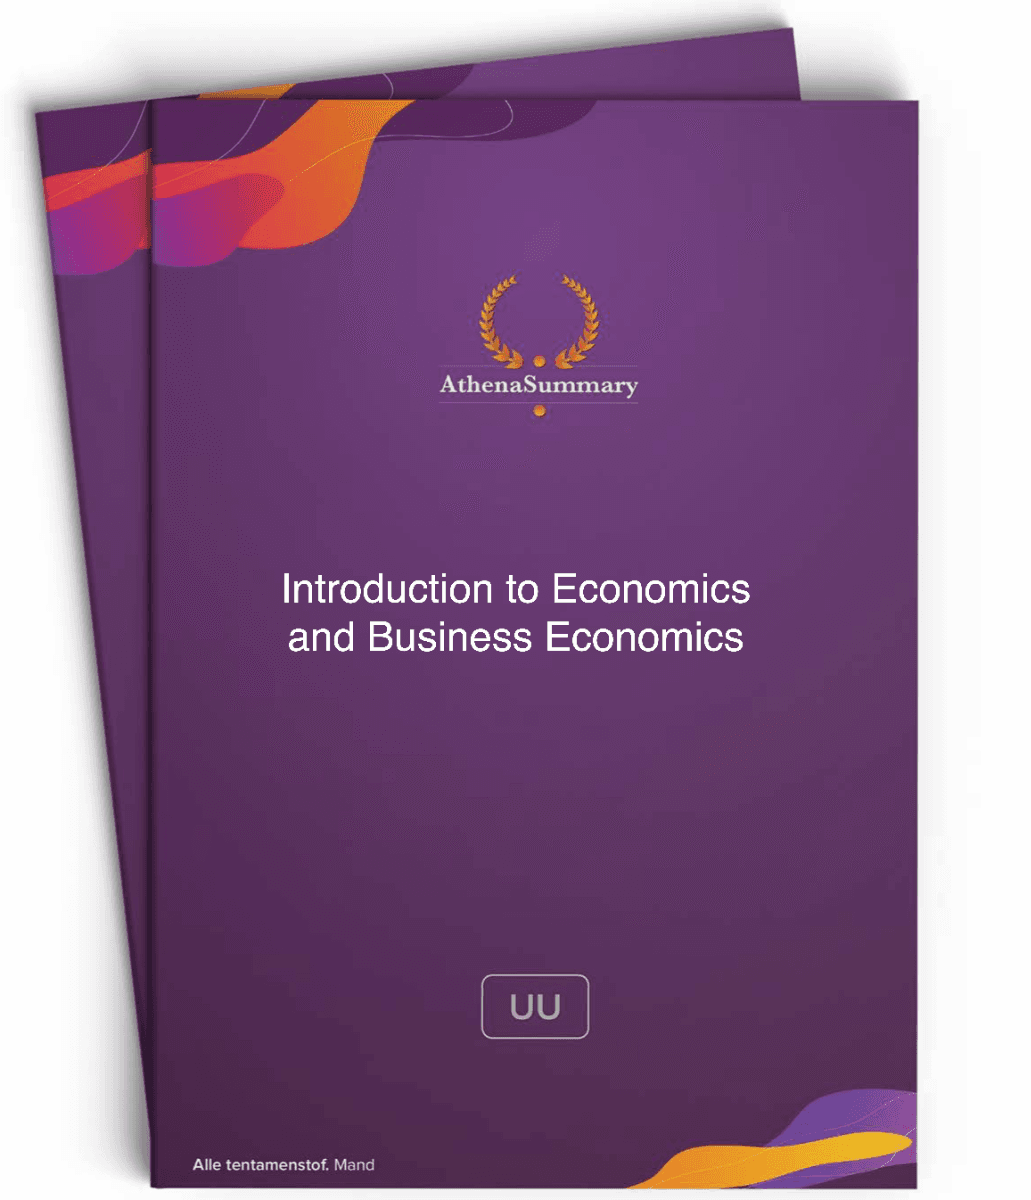 Literature Summary: Introduction to Economics and Business Economics